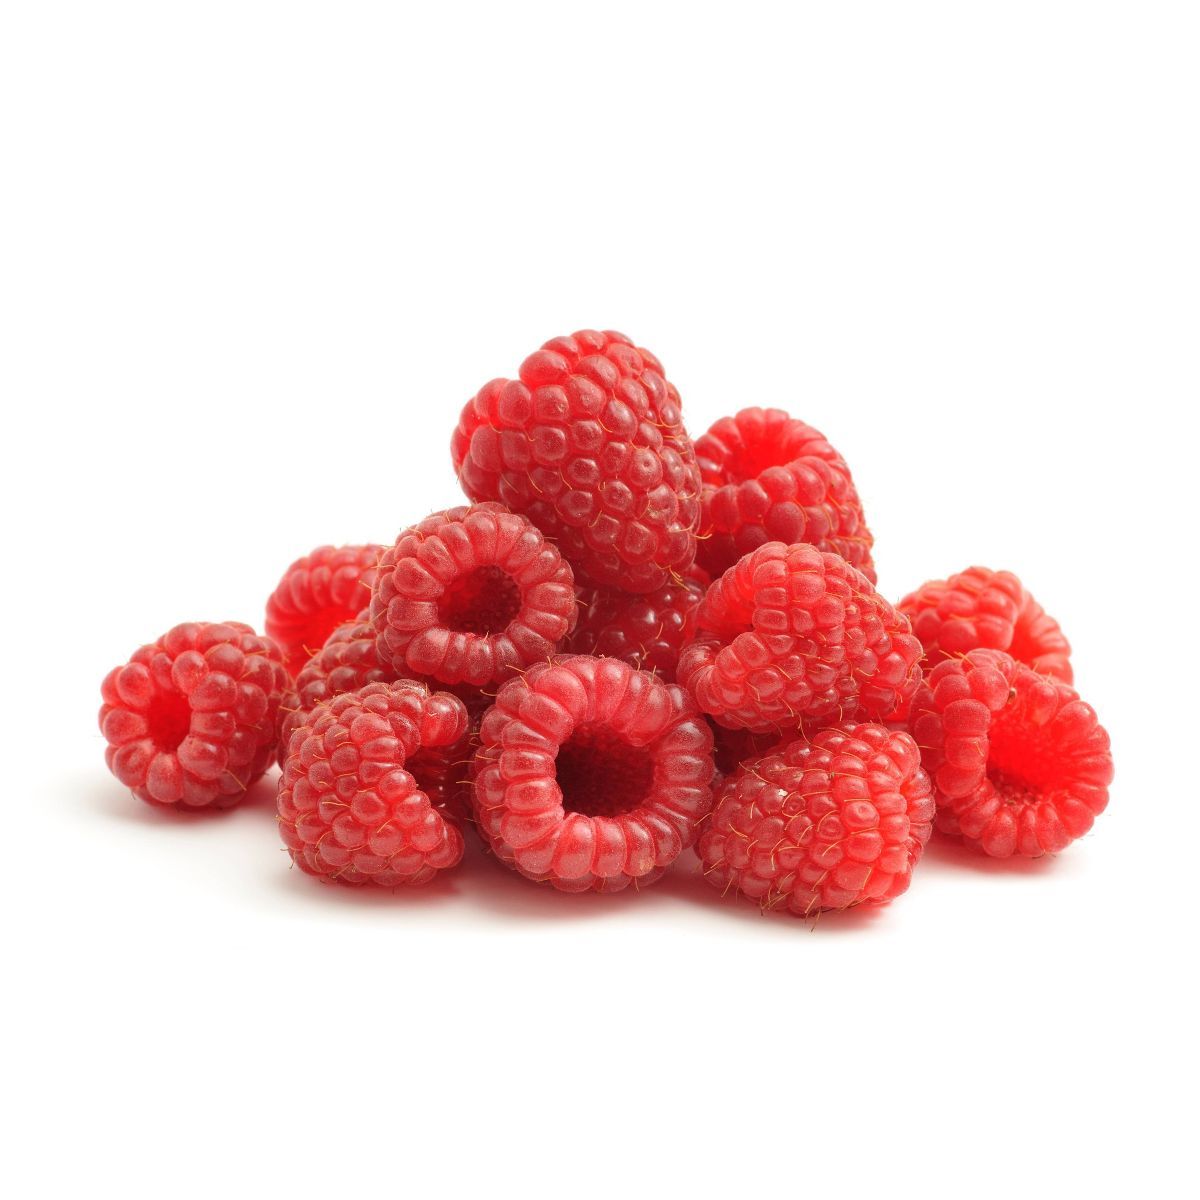 Organic Raspberries - 6oz | Target